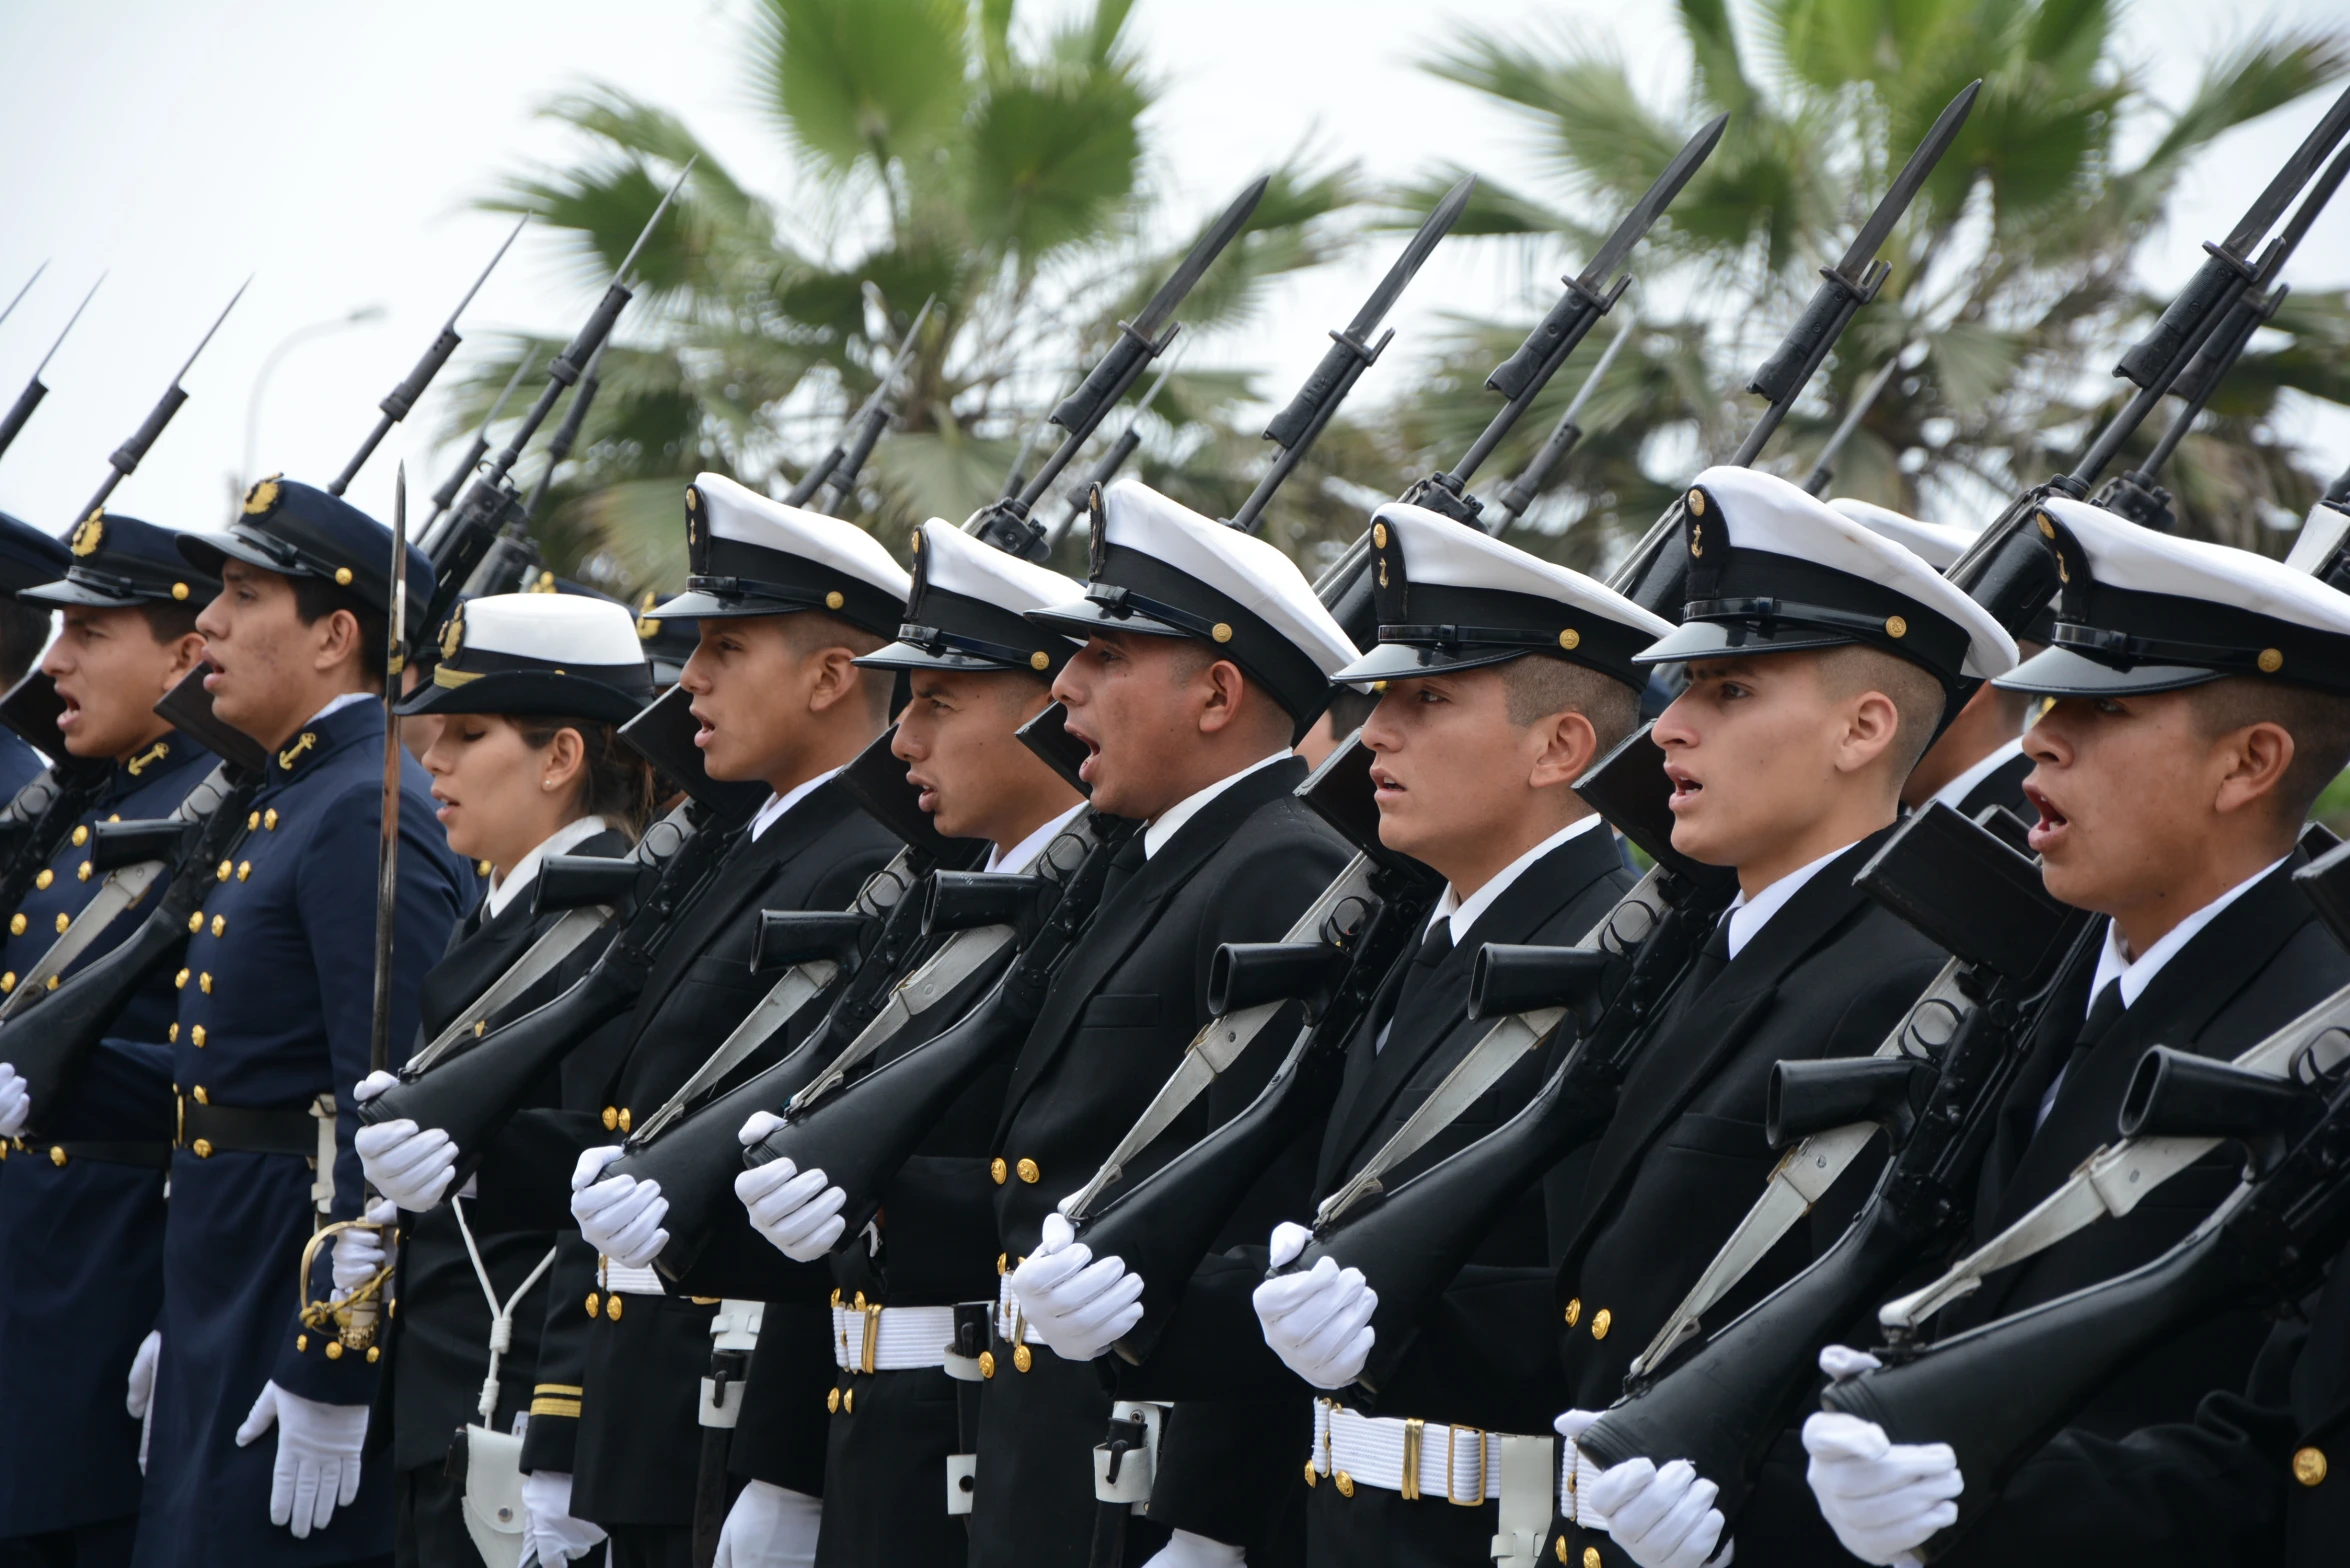 uniformed men in uniform standing in a row